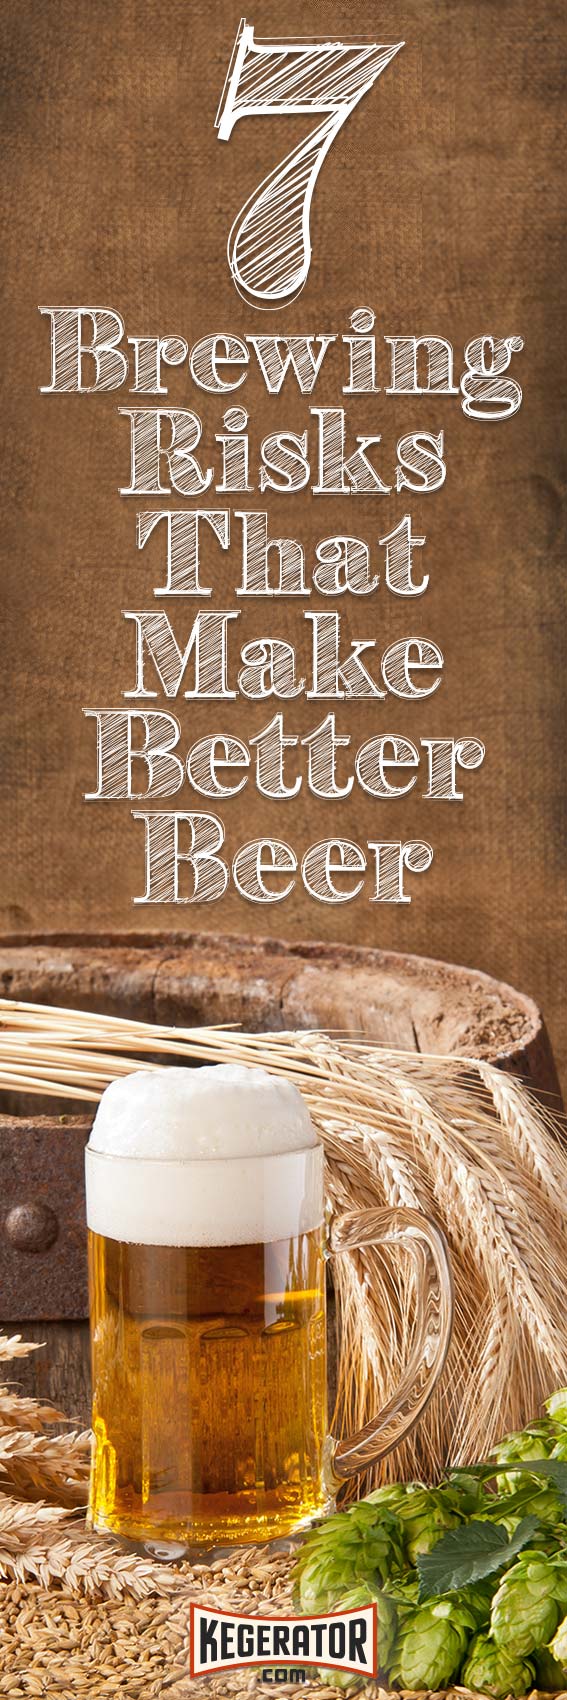 7 Risks Every Homebrewer Should Take to Make Better Beer